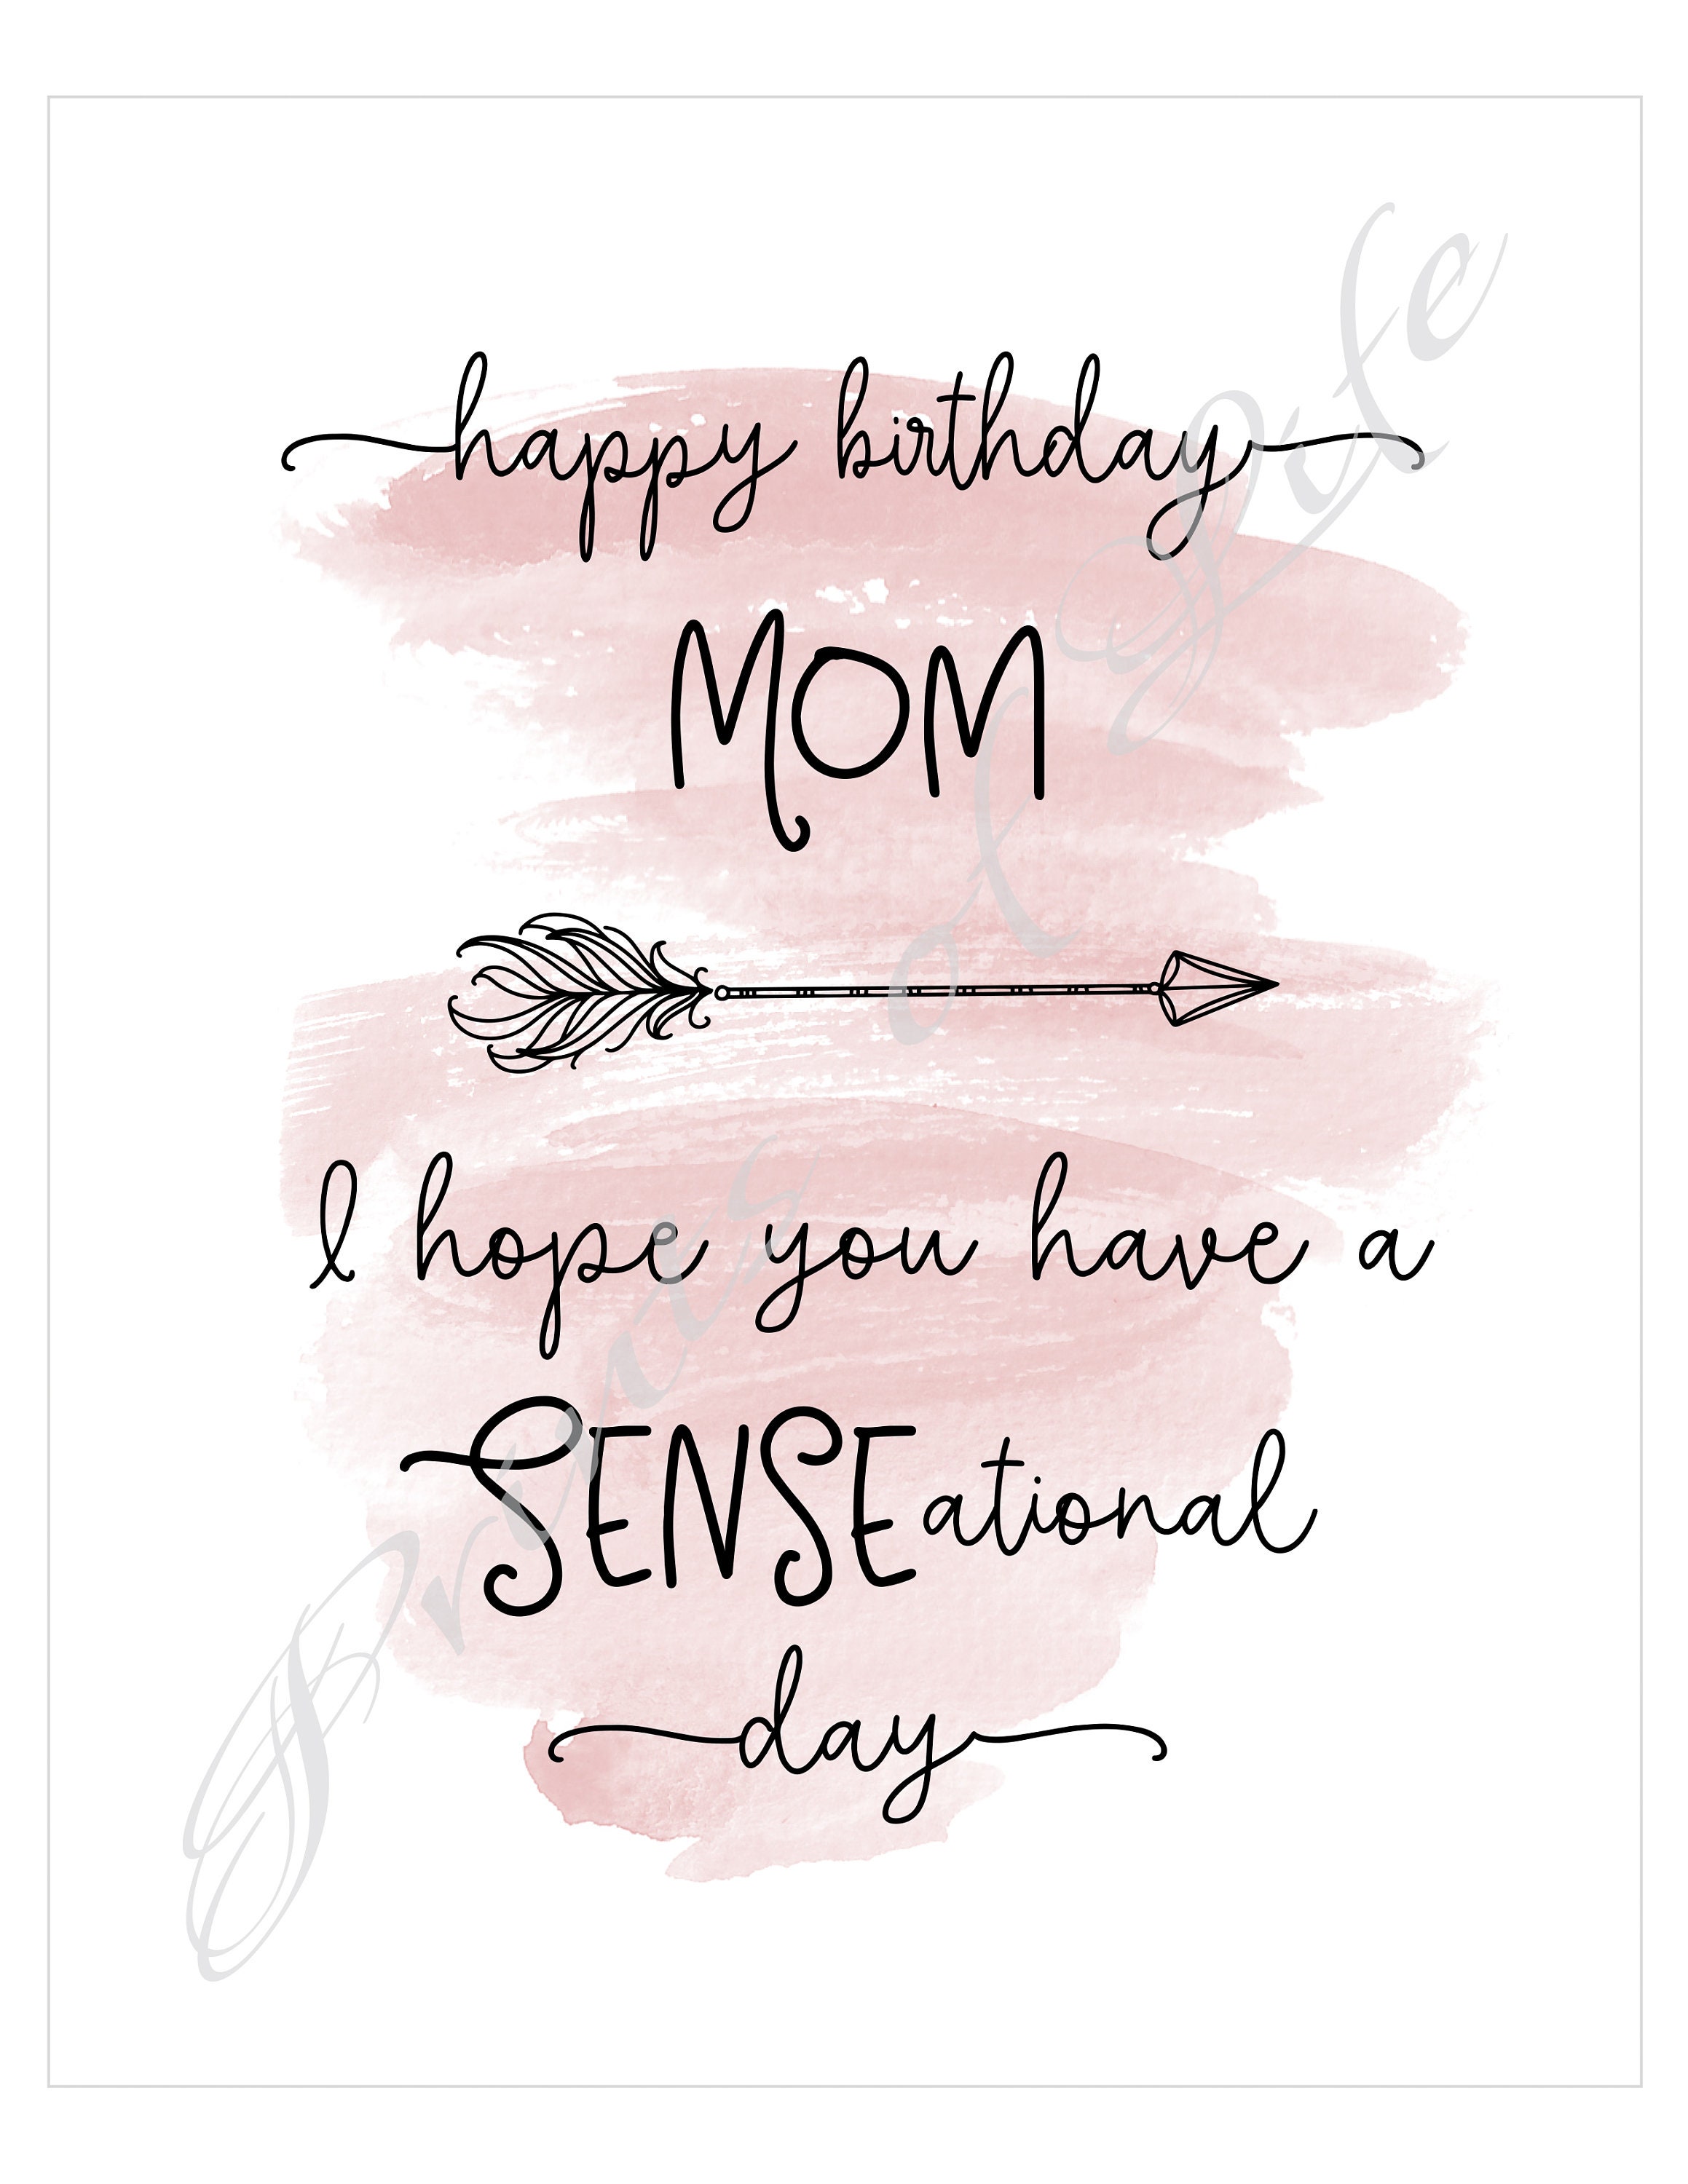 Printable 5 Senses Gift Tags for Mom 5 Senses Mom Tags for Mothers